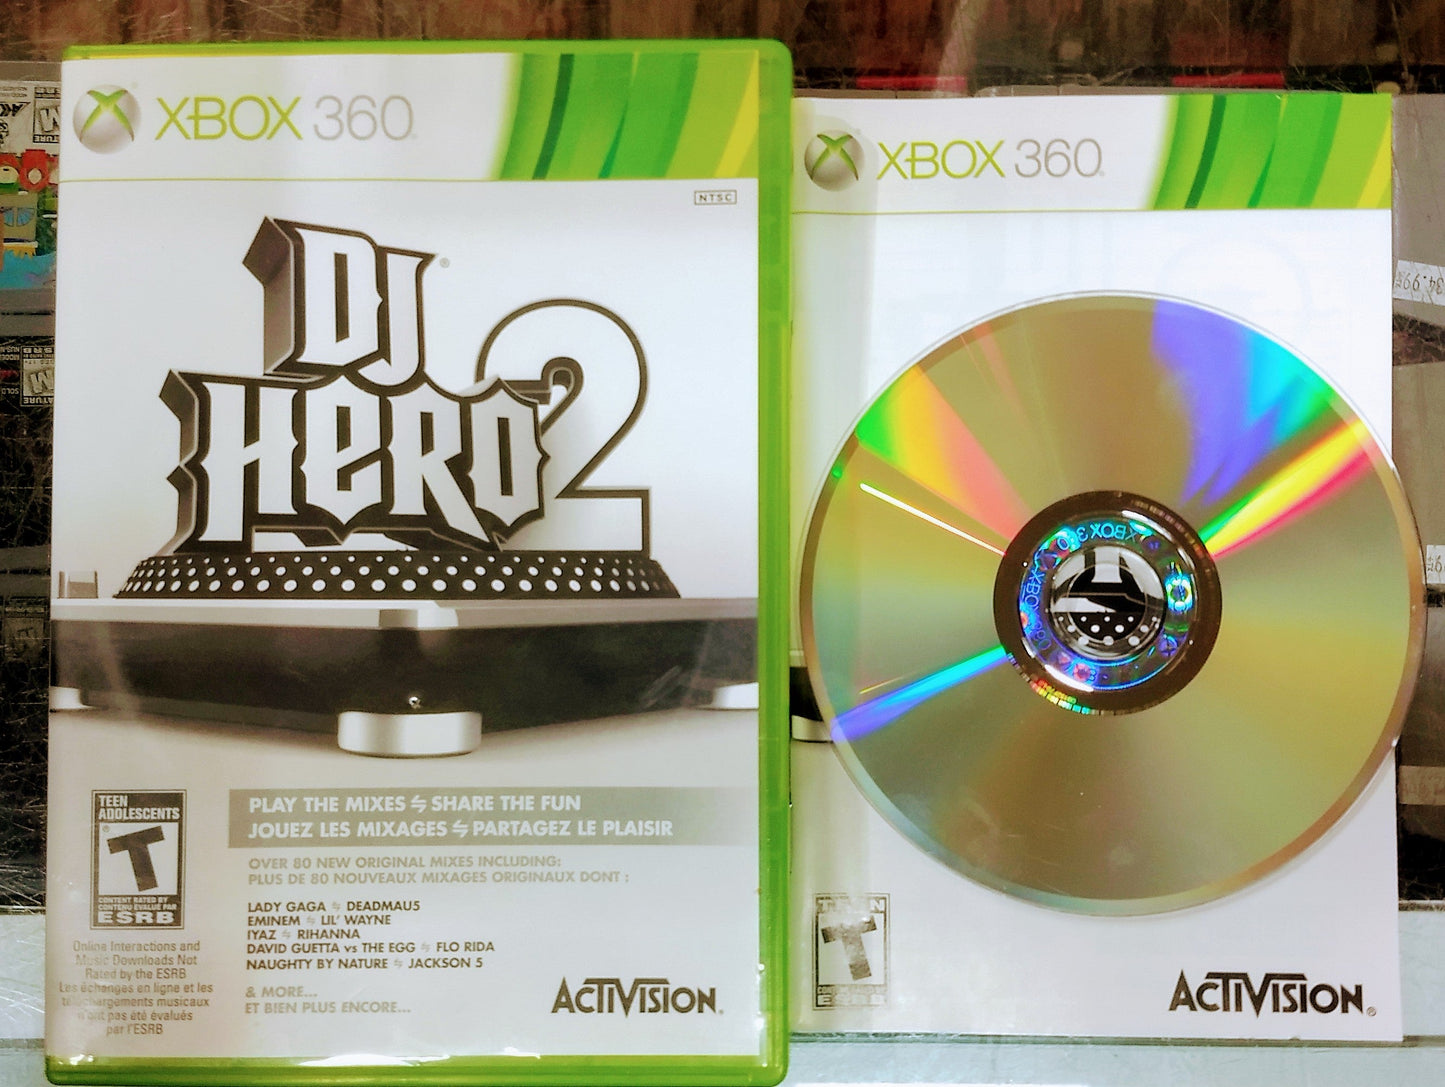 DJ HERO 2 (XBOX 360 X360) - jeux video game-x